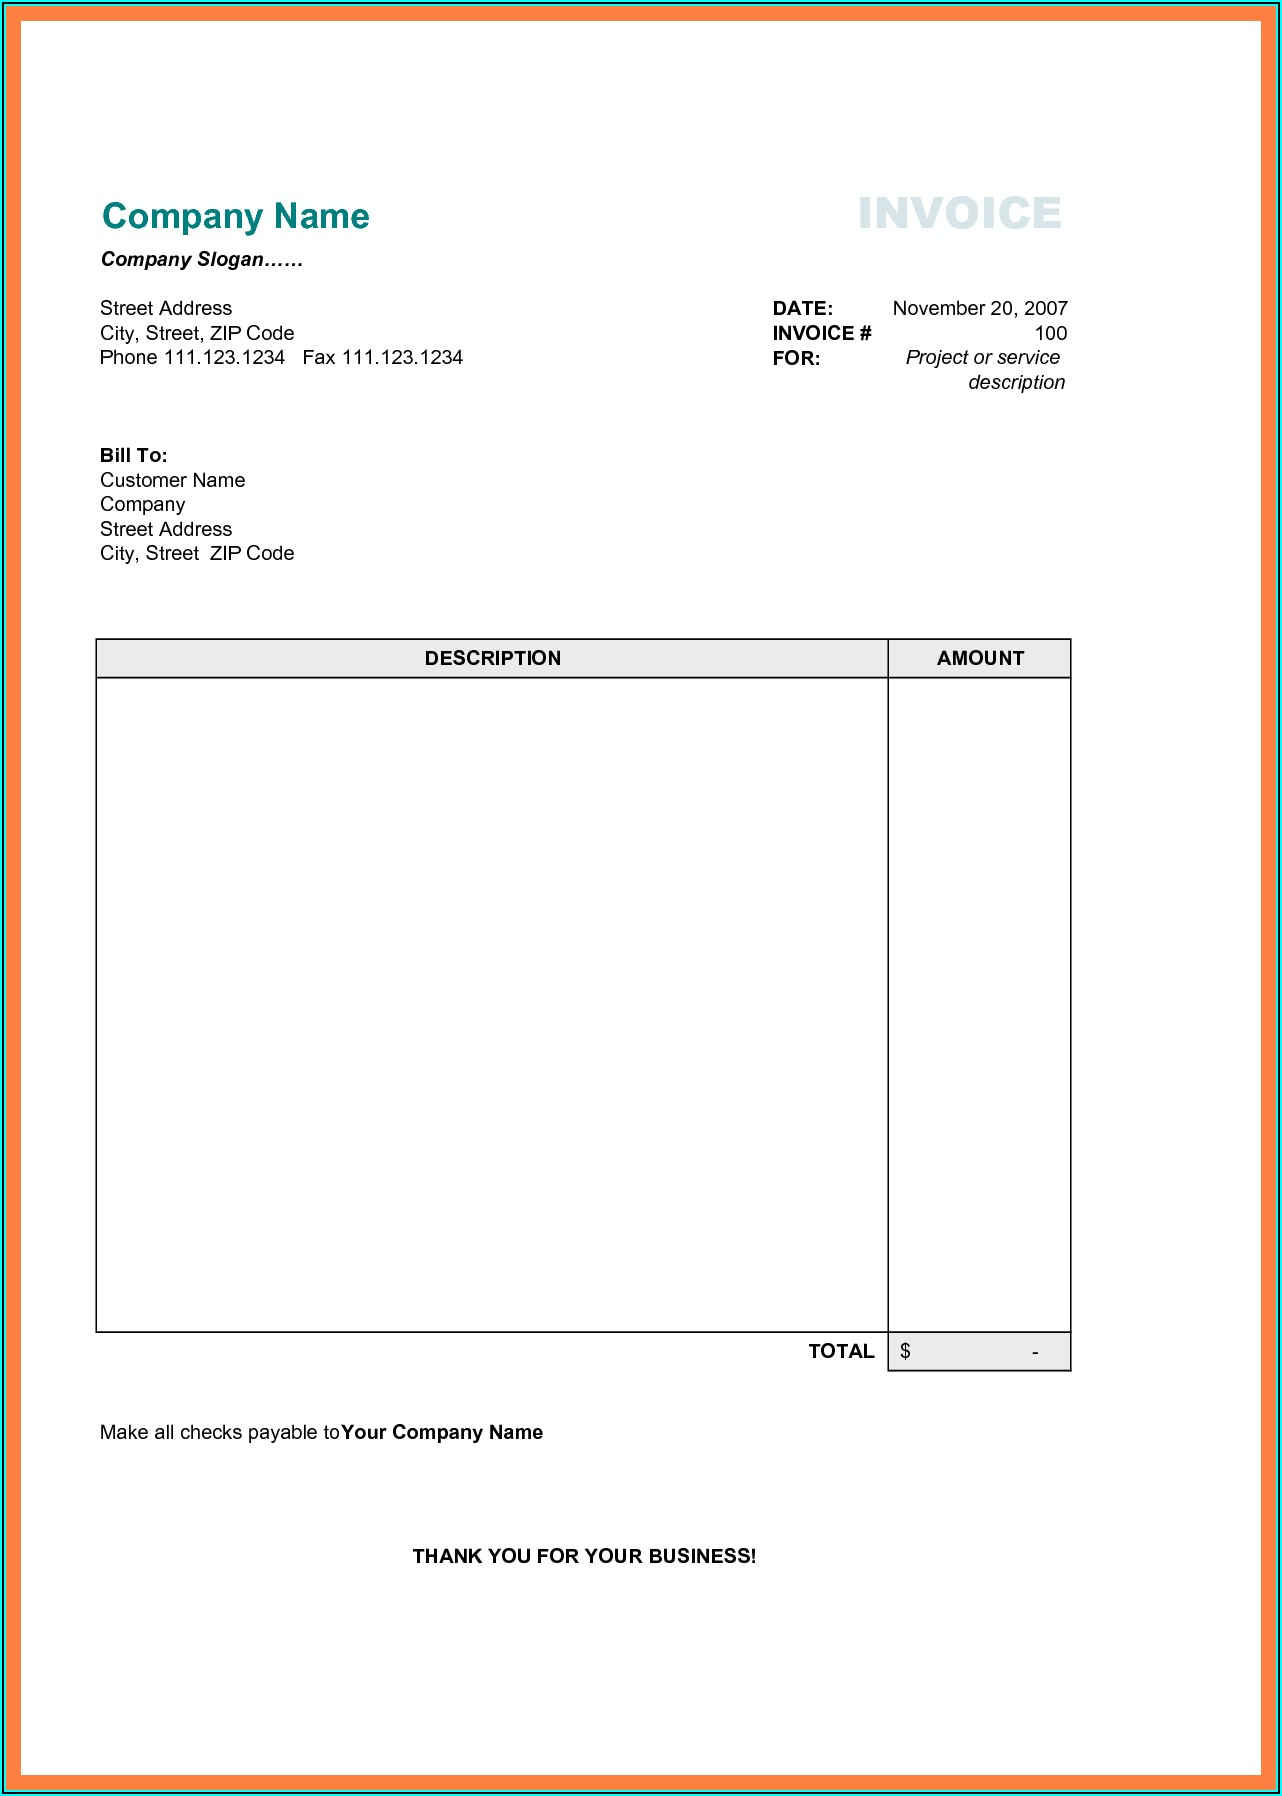 Print Invoice Forms